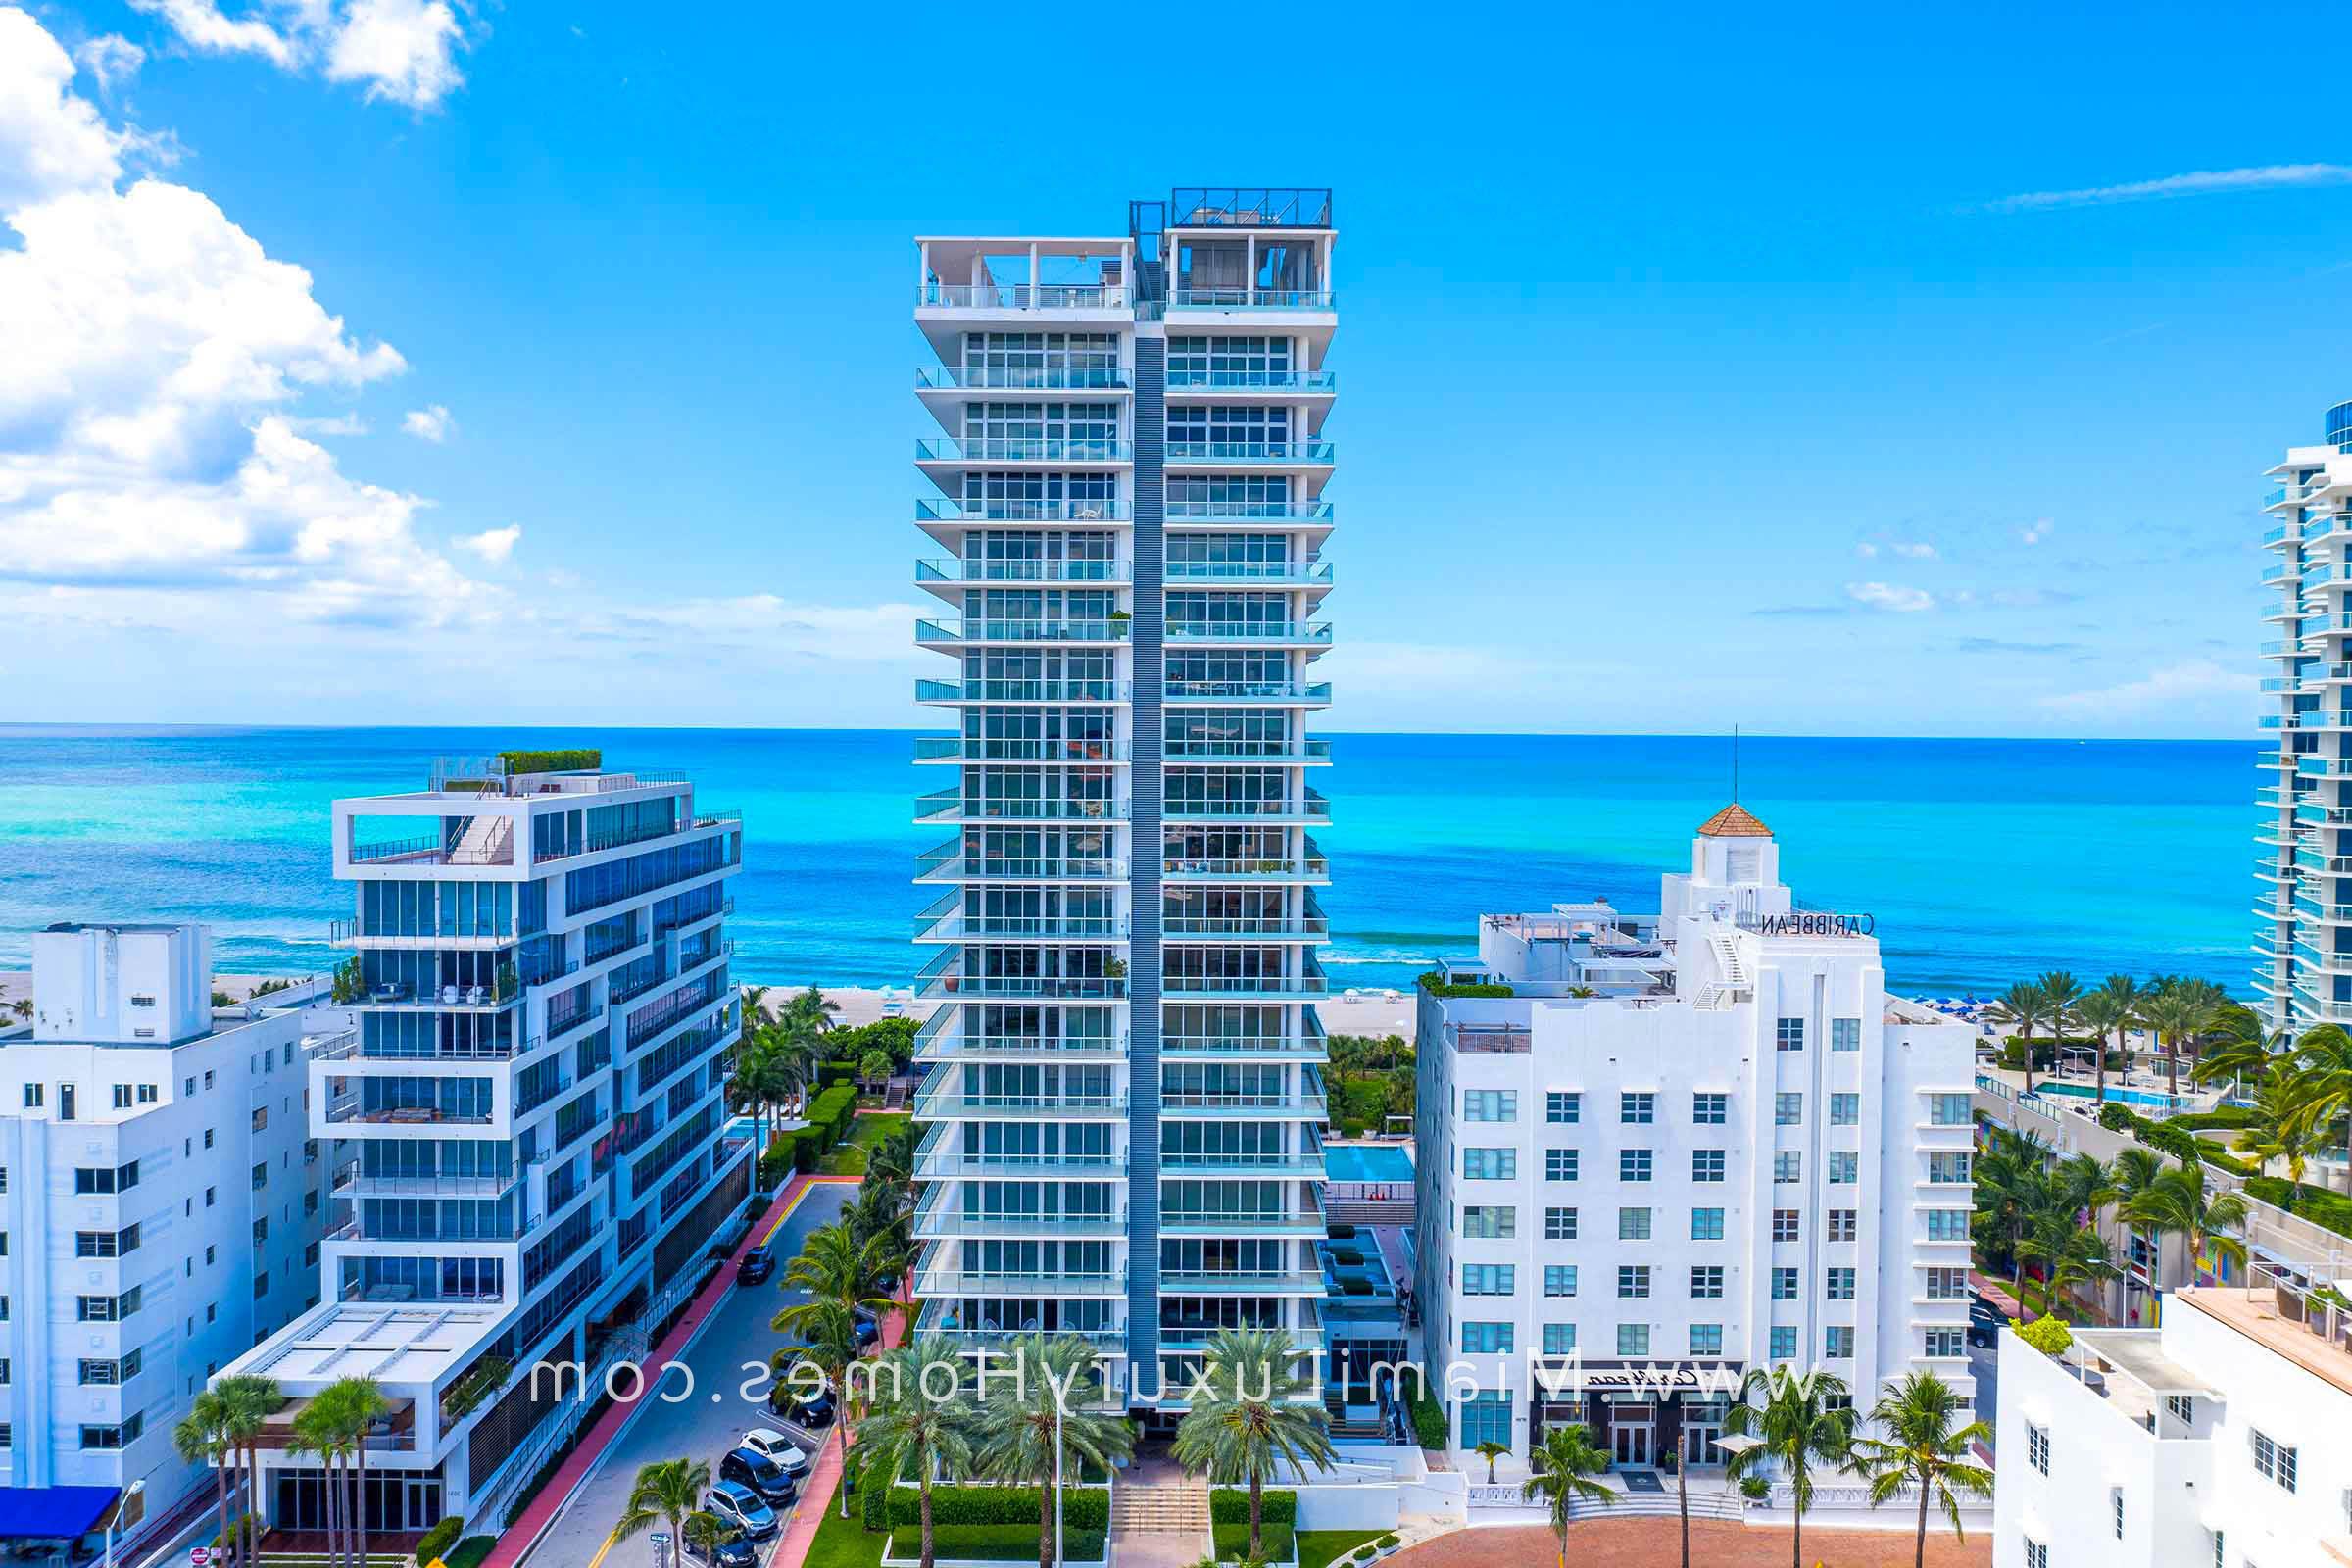 Caribbean Condos in Miami Beach